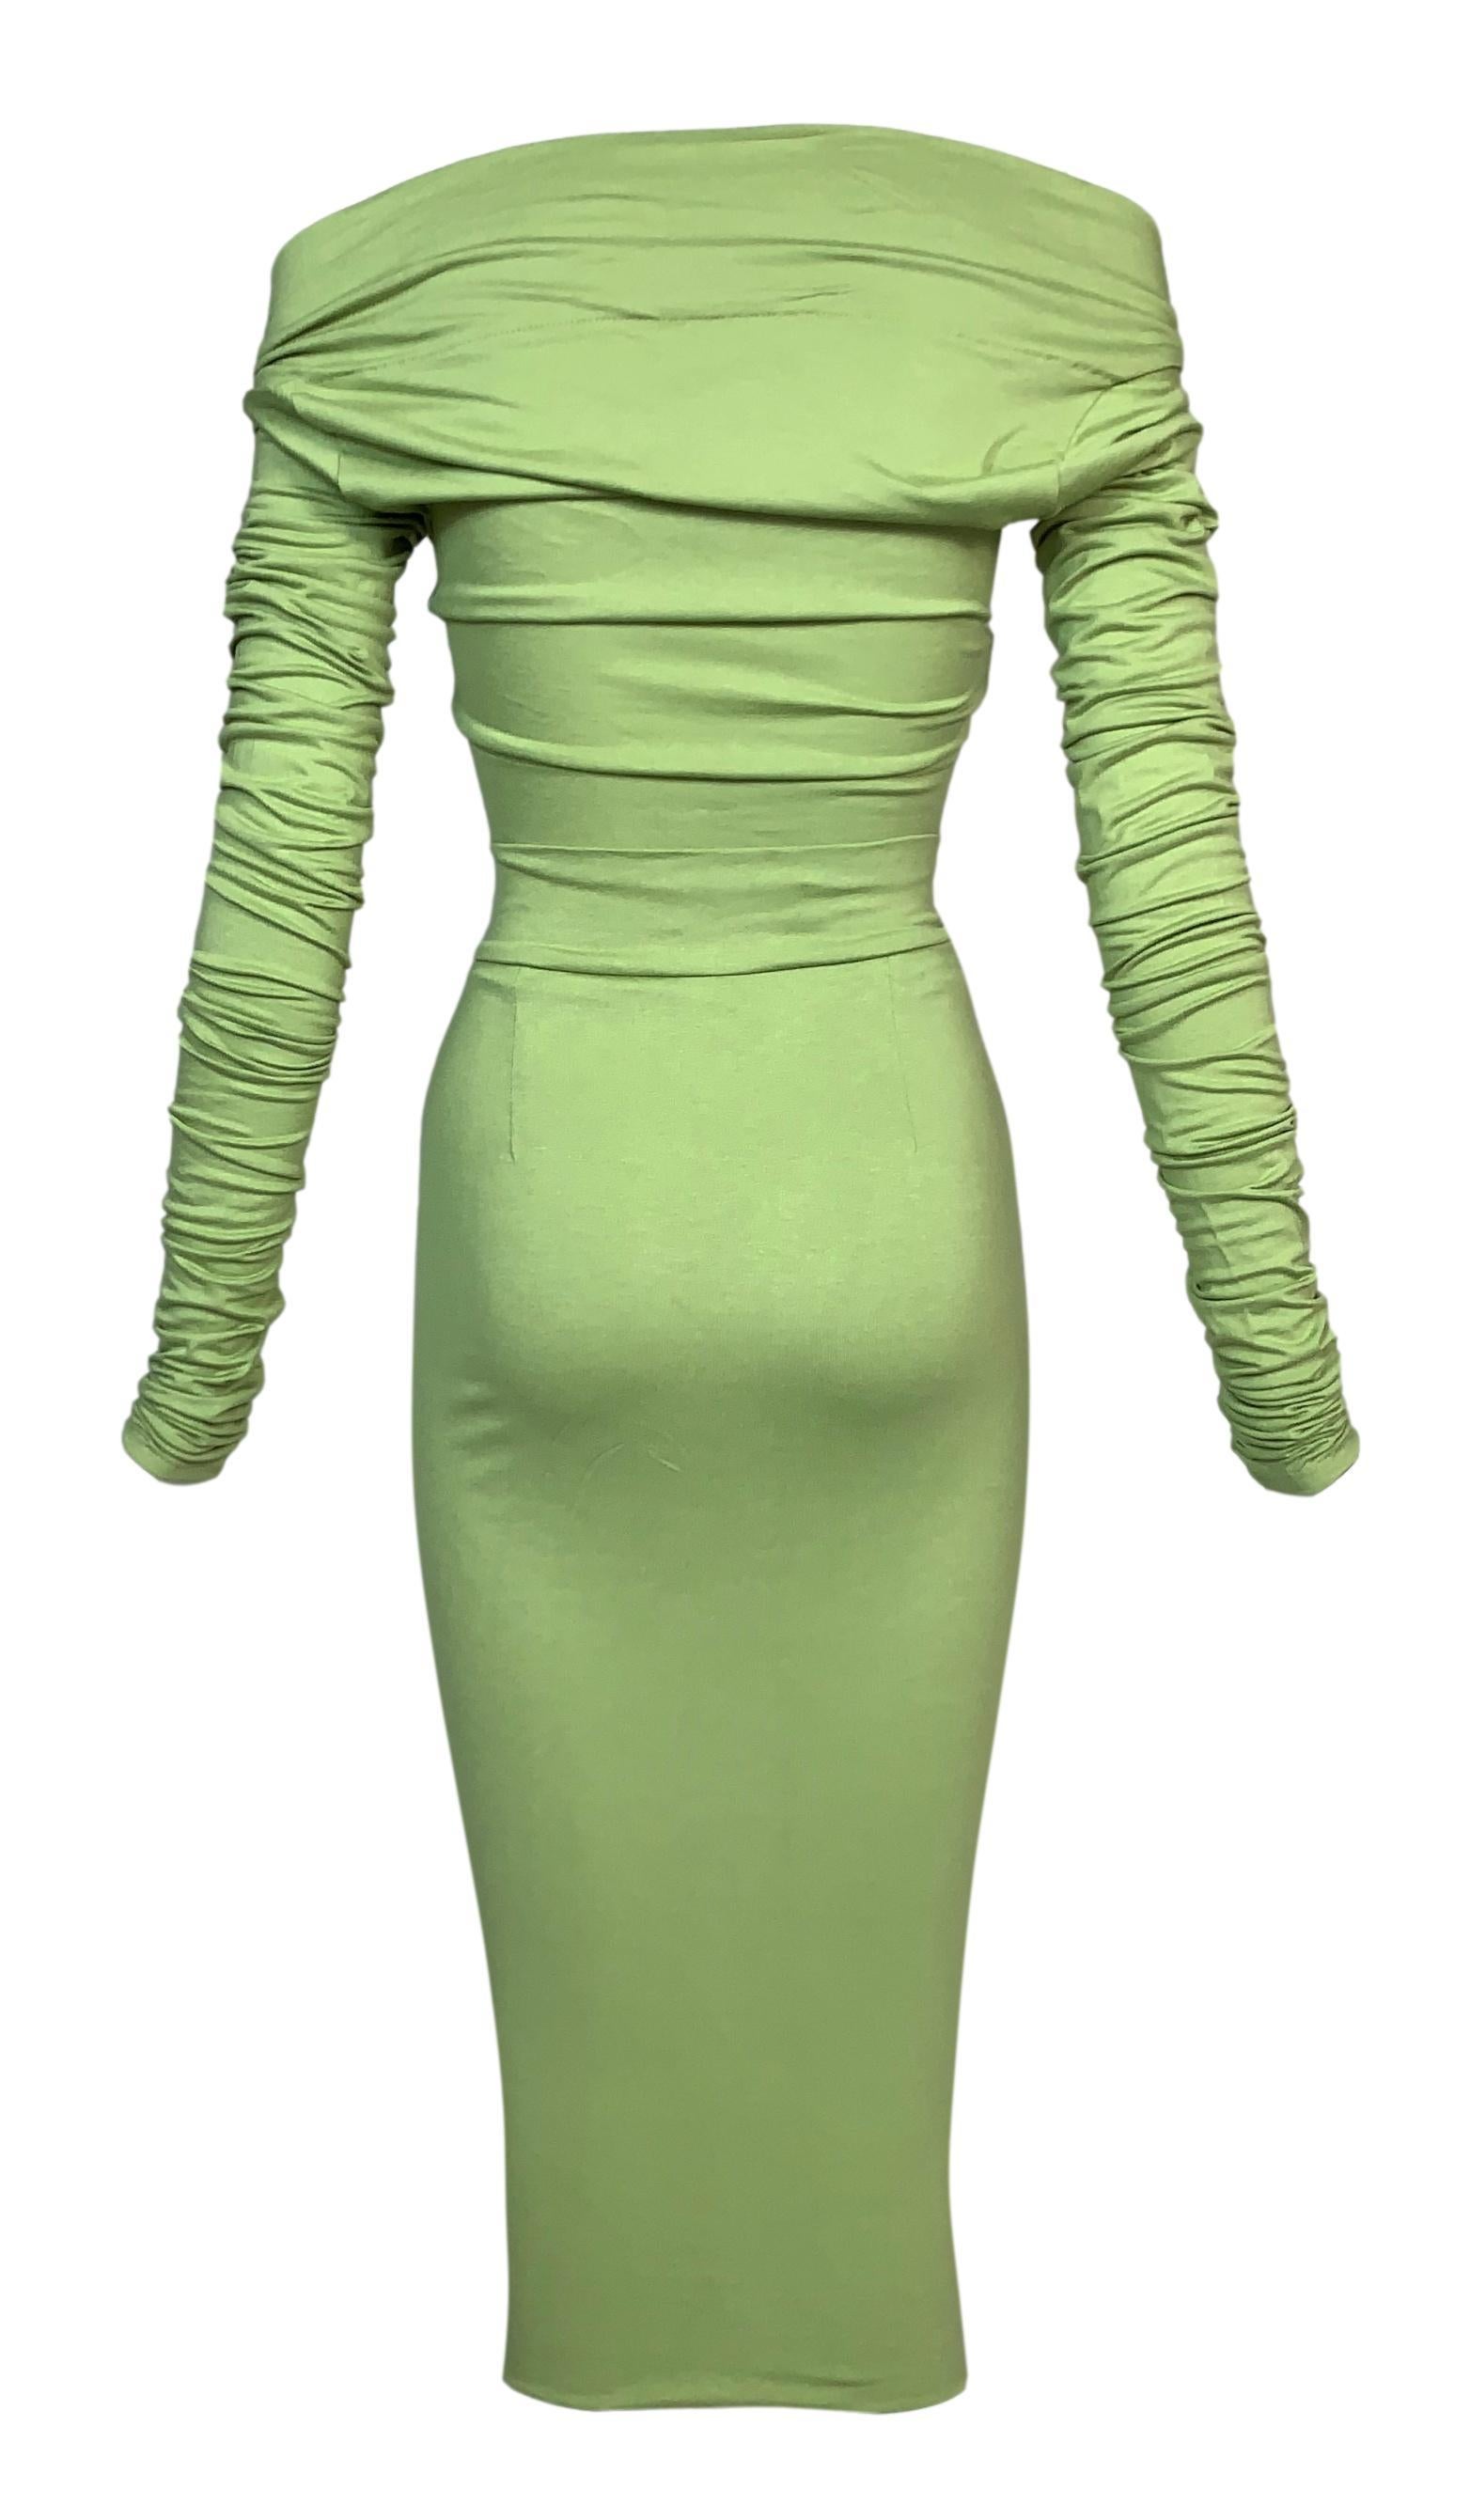 S/S 1991 Dolce & Gabbana Runway Green Off Shoulder Crop Top & High Waist Skirt In Good Condition In Yukon, OK